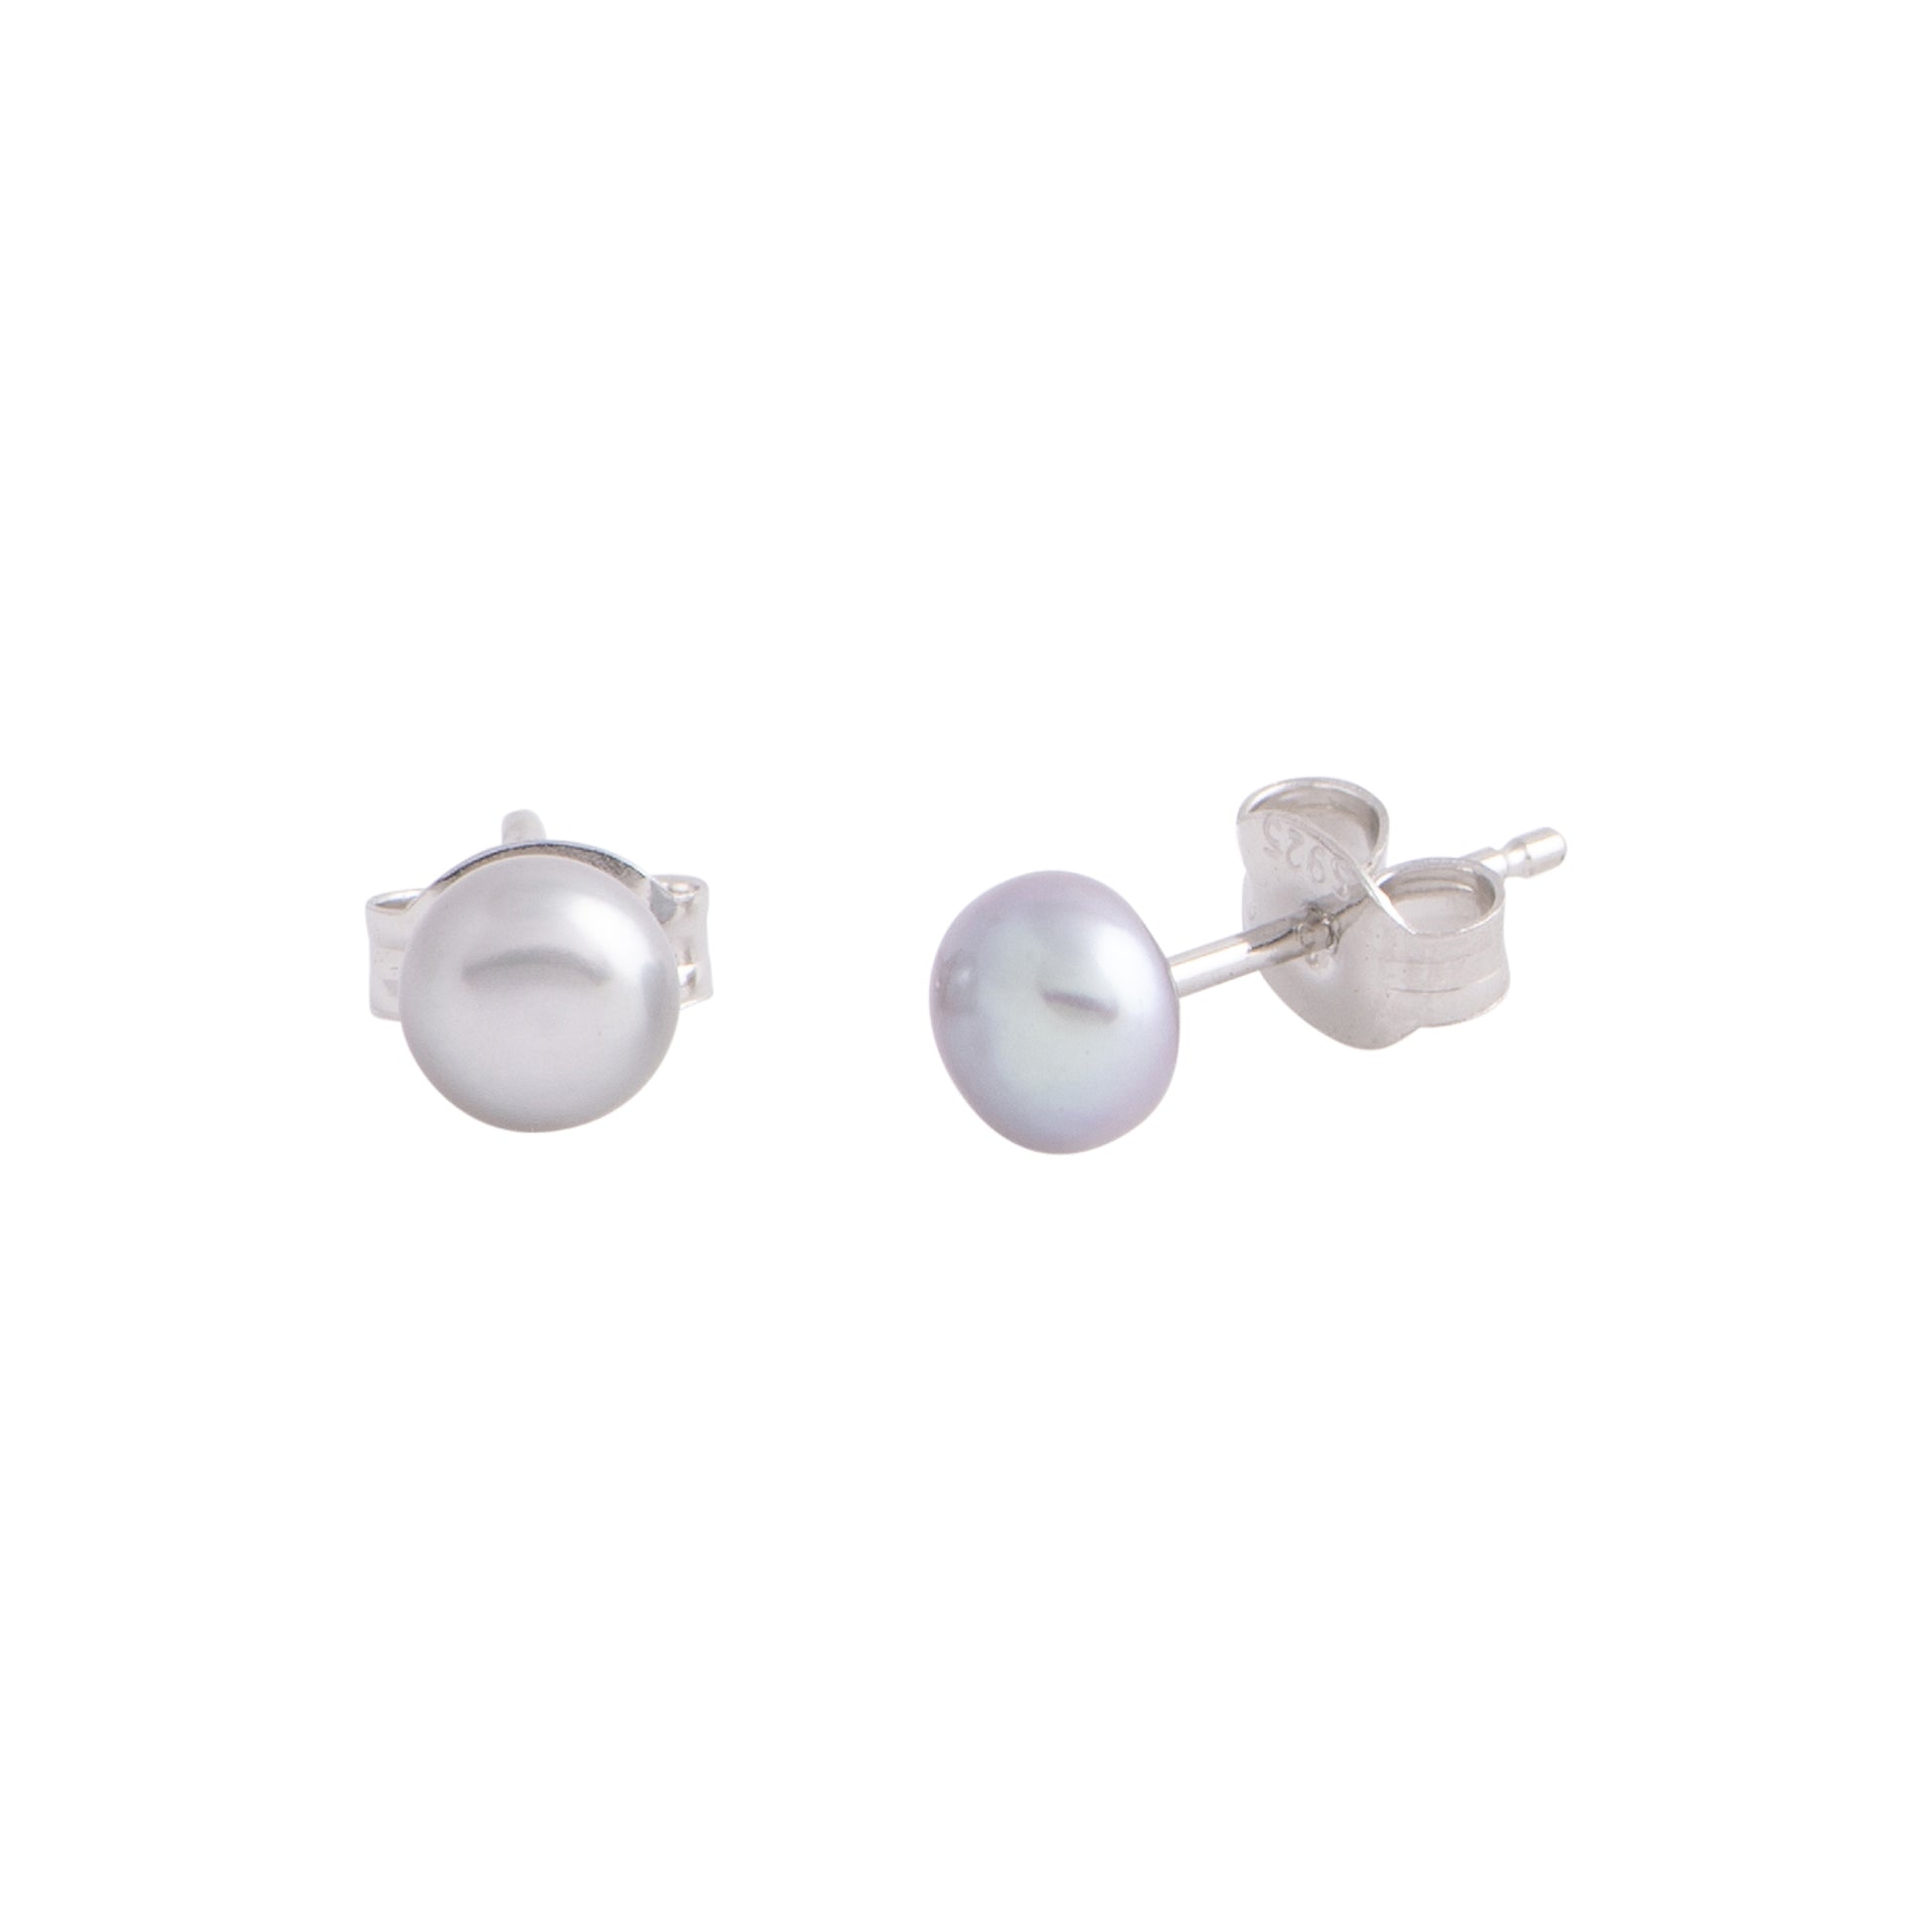 Alika - Small (5mm) pearl nickle-free earrings (Silver pearls)